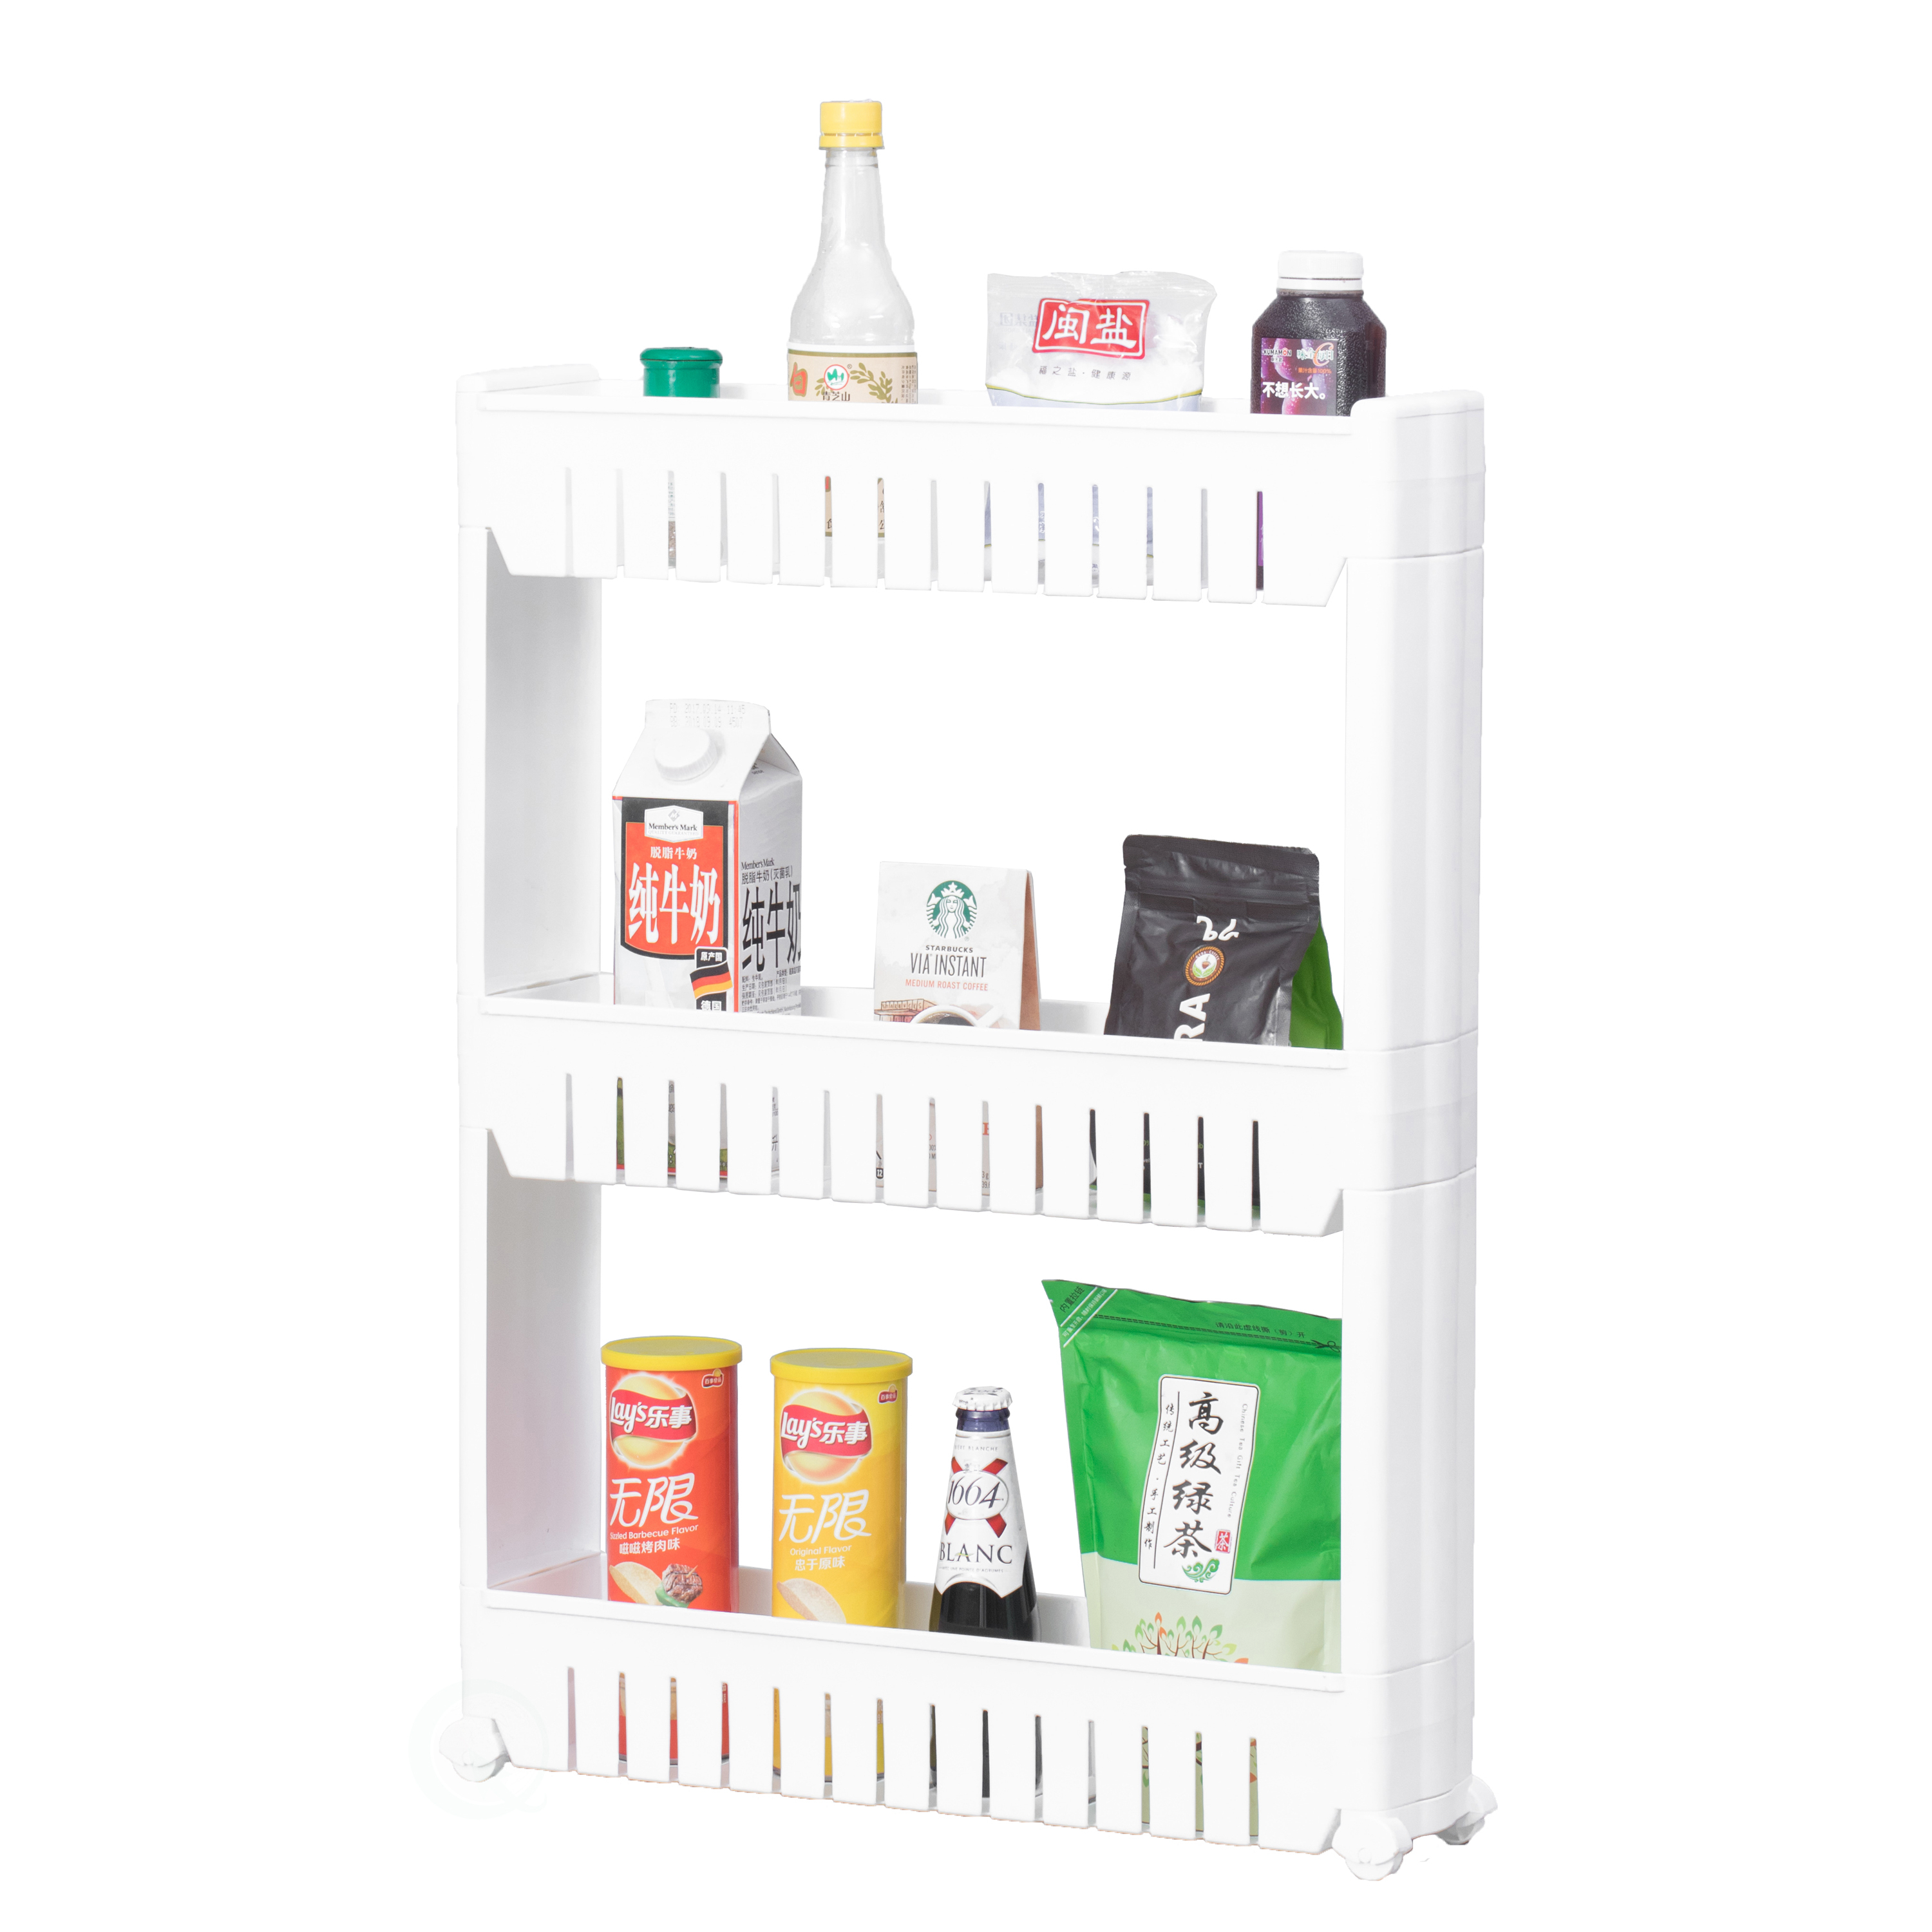 Plastic Storage Cabinet Organizer 3 Shelf Cart Rack Tower With Wheels